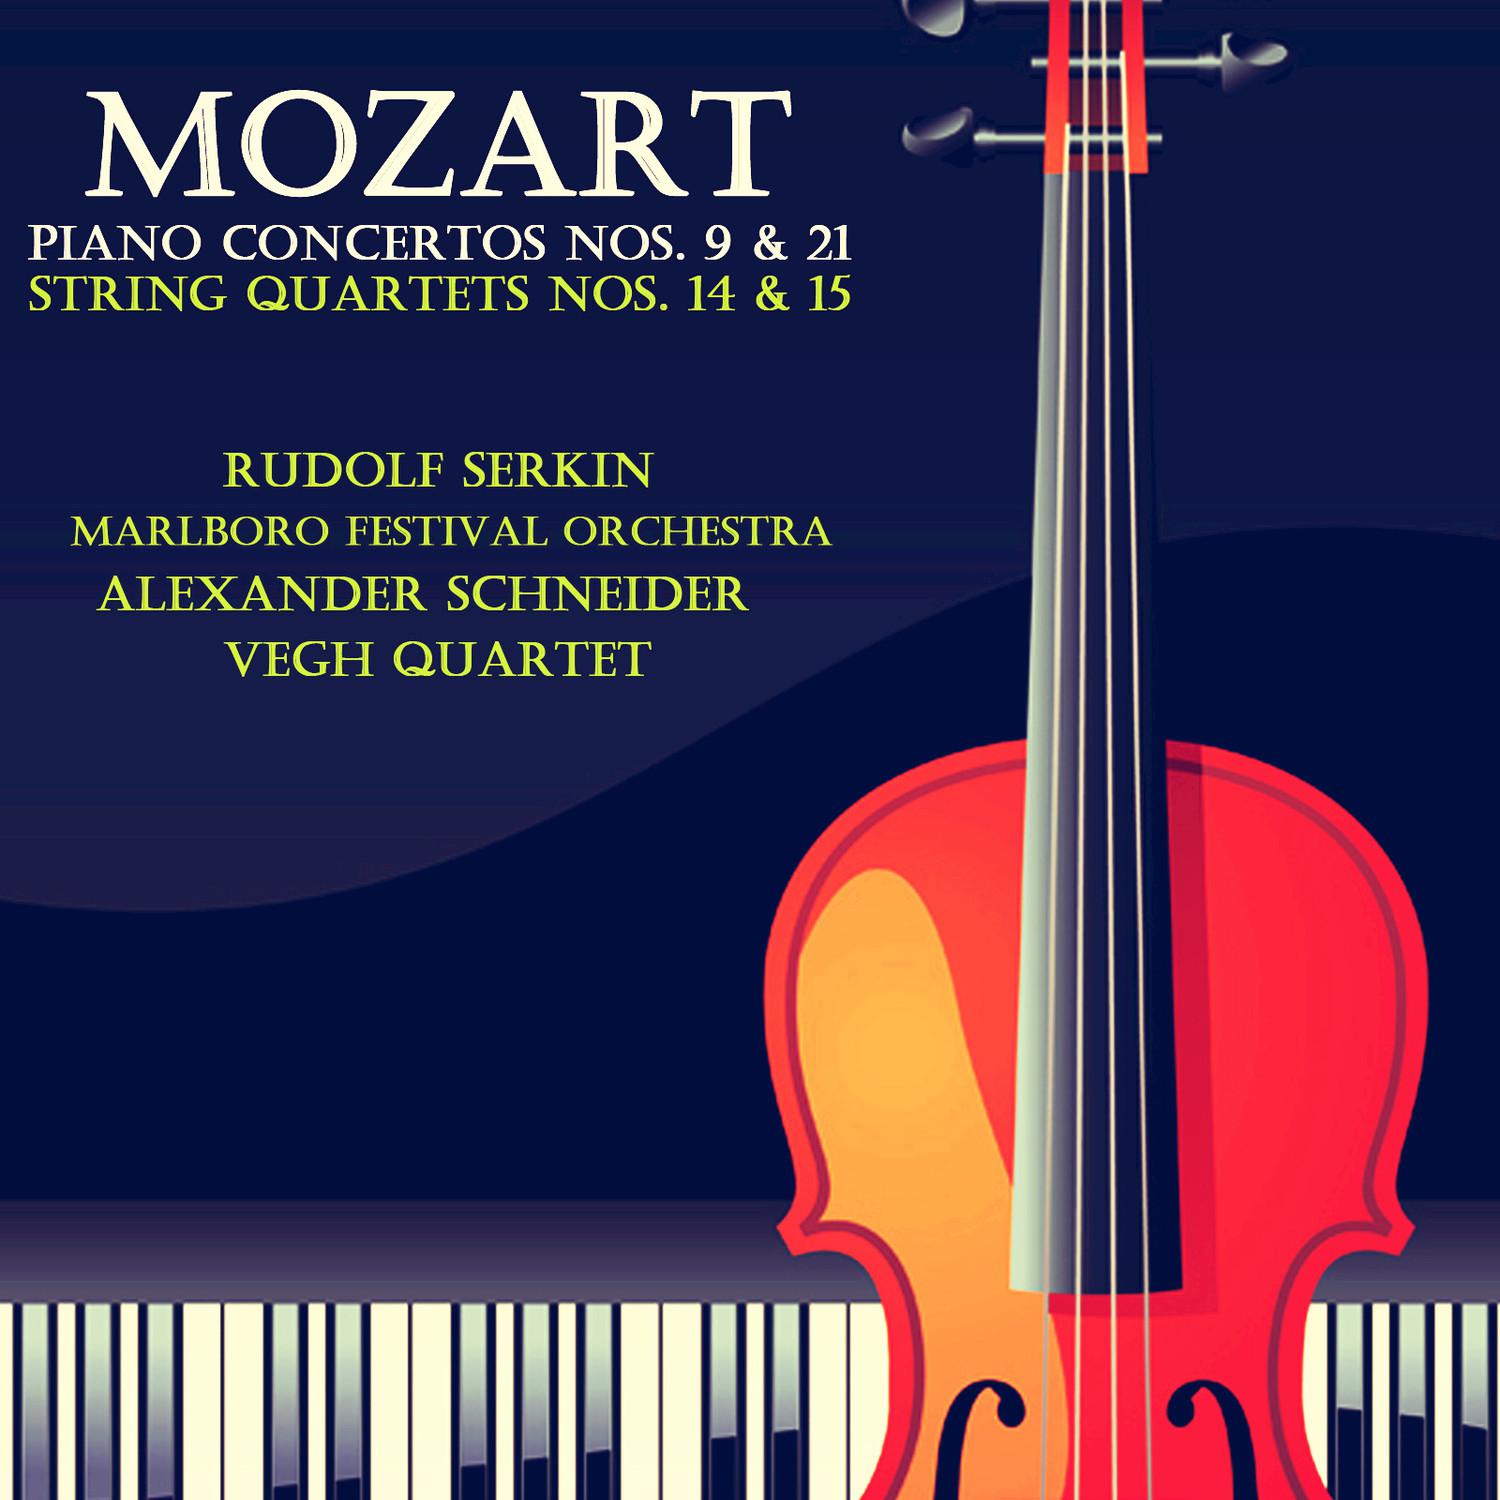 String Quartet No. 15 in D Minor, K. 421: I. Allegro moderato